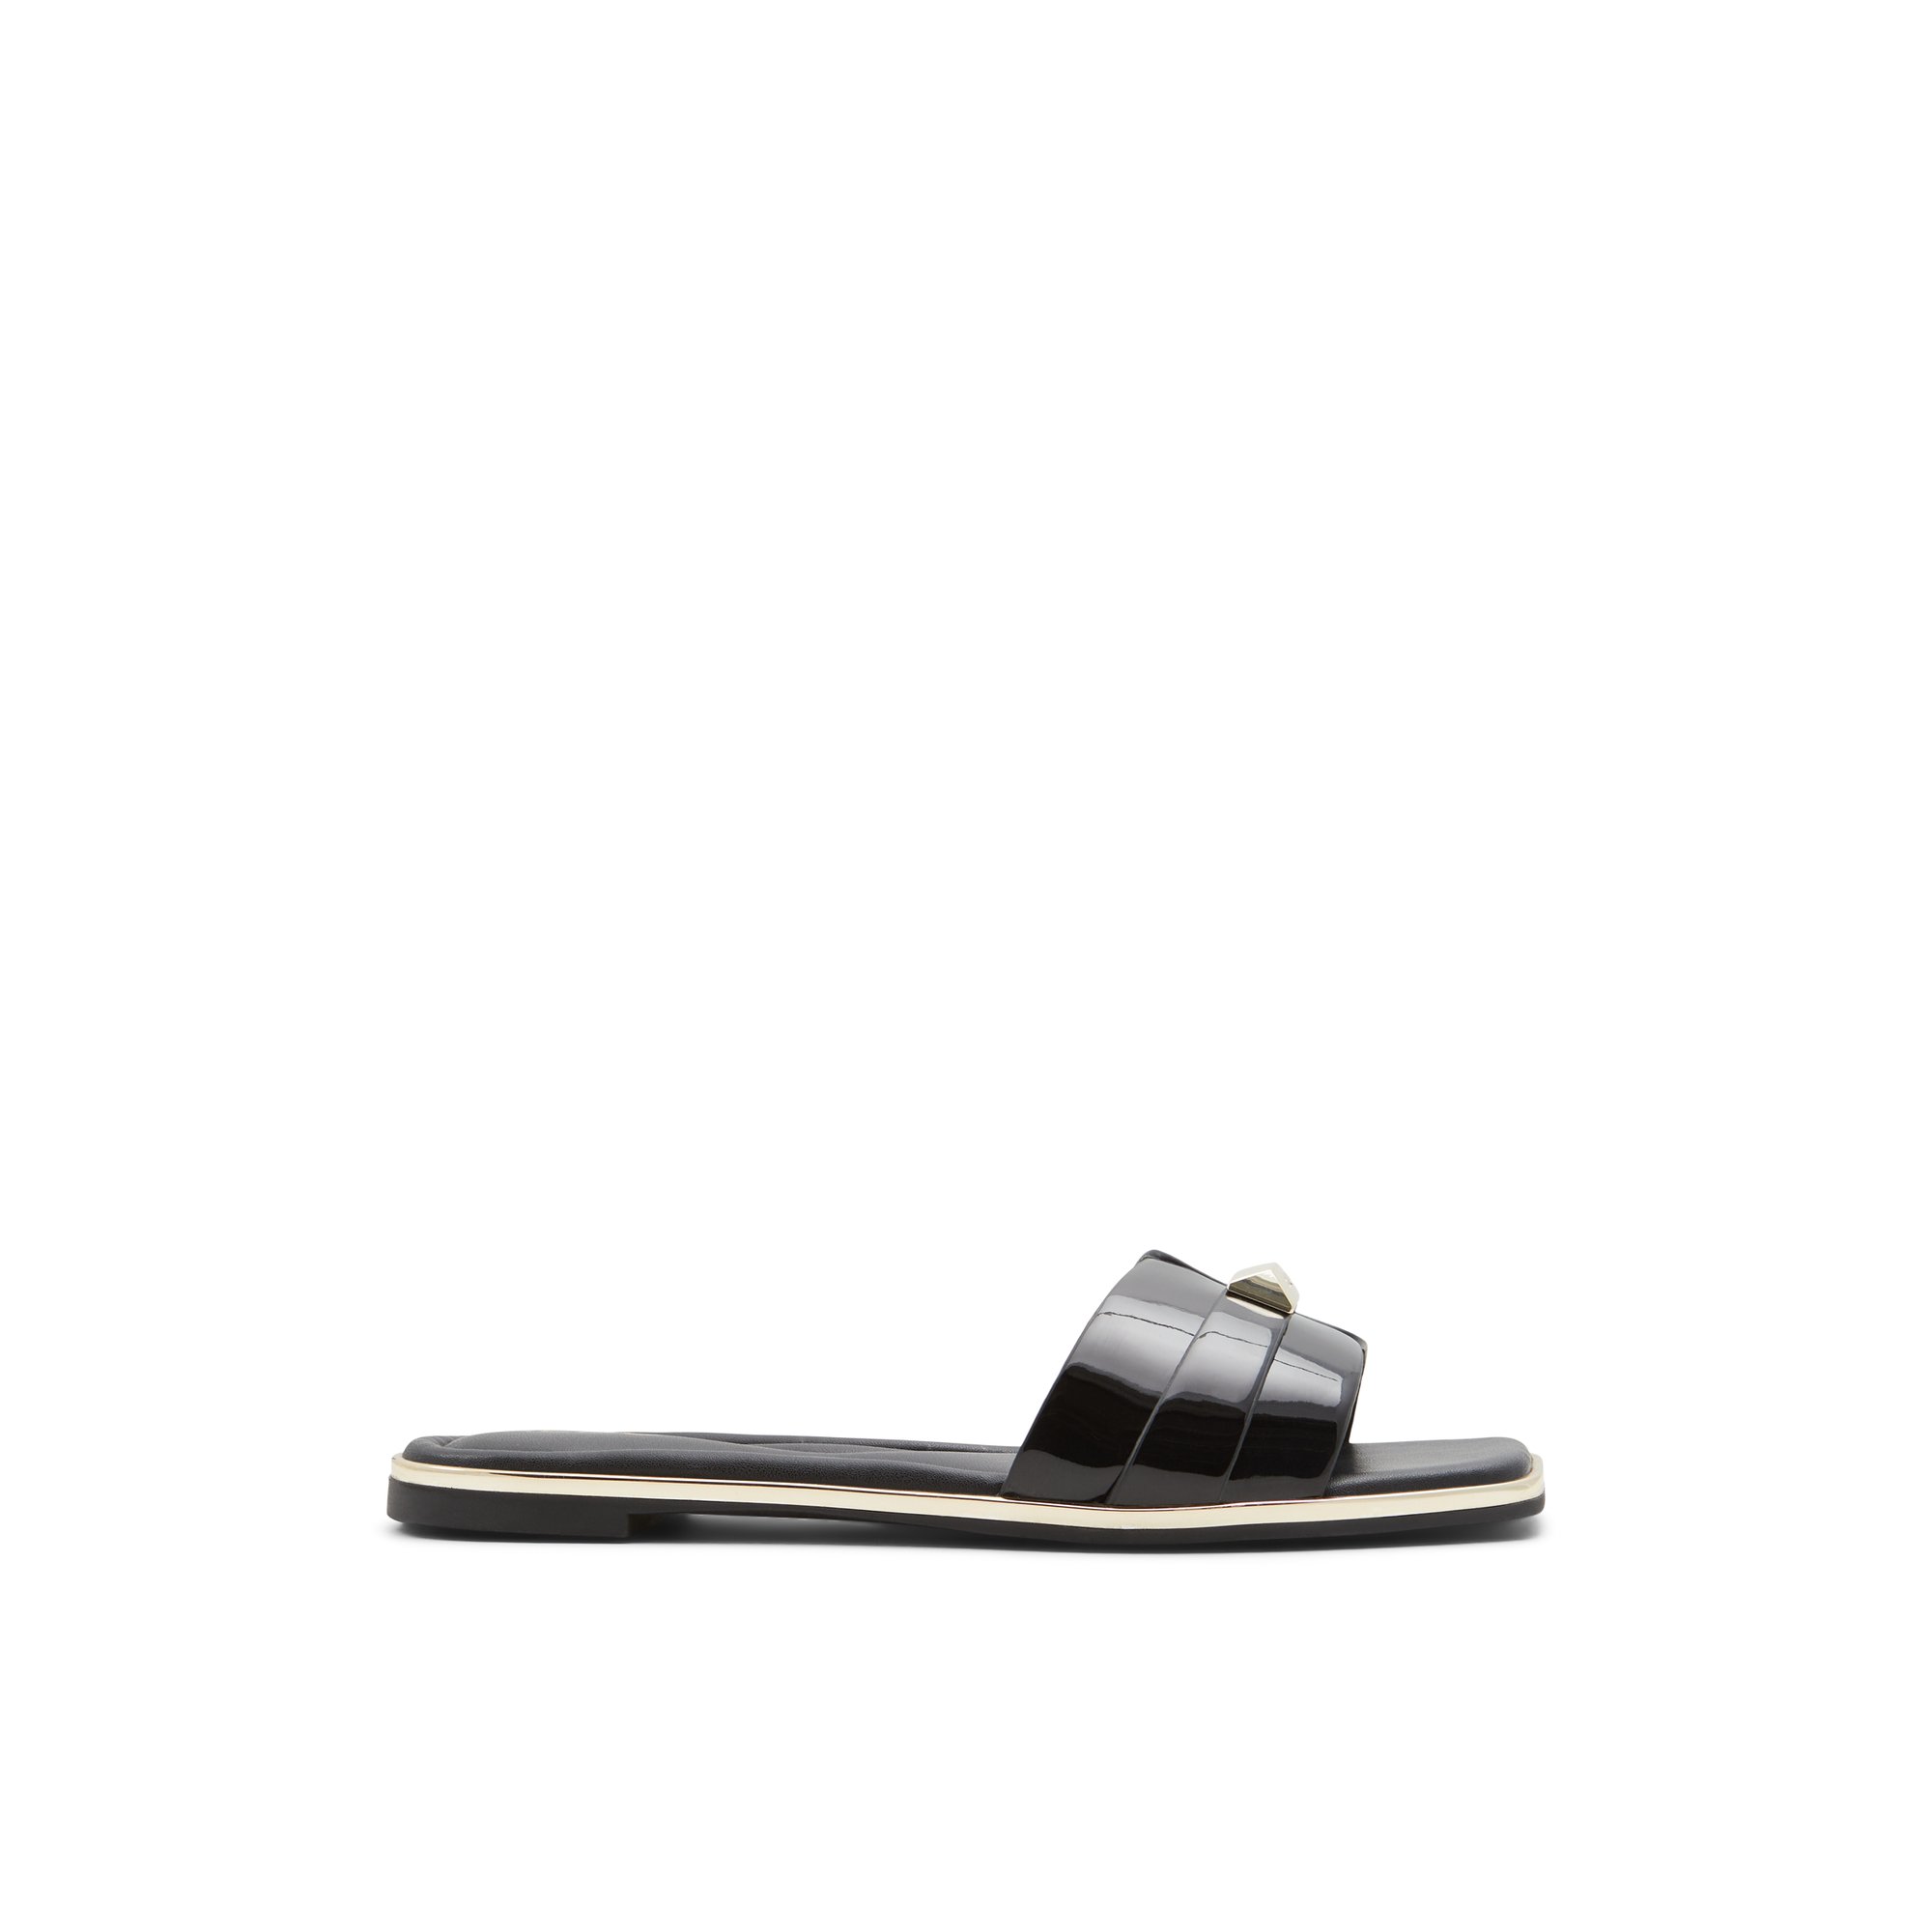 ALDO Darine - Women's Sandals Flats - Black